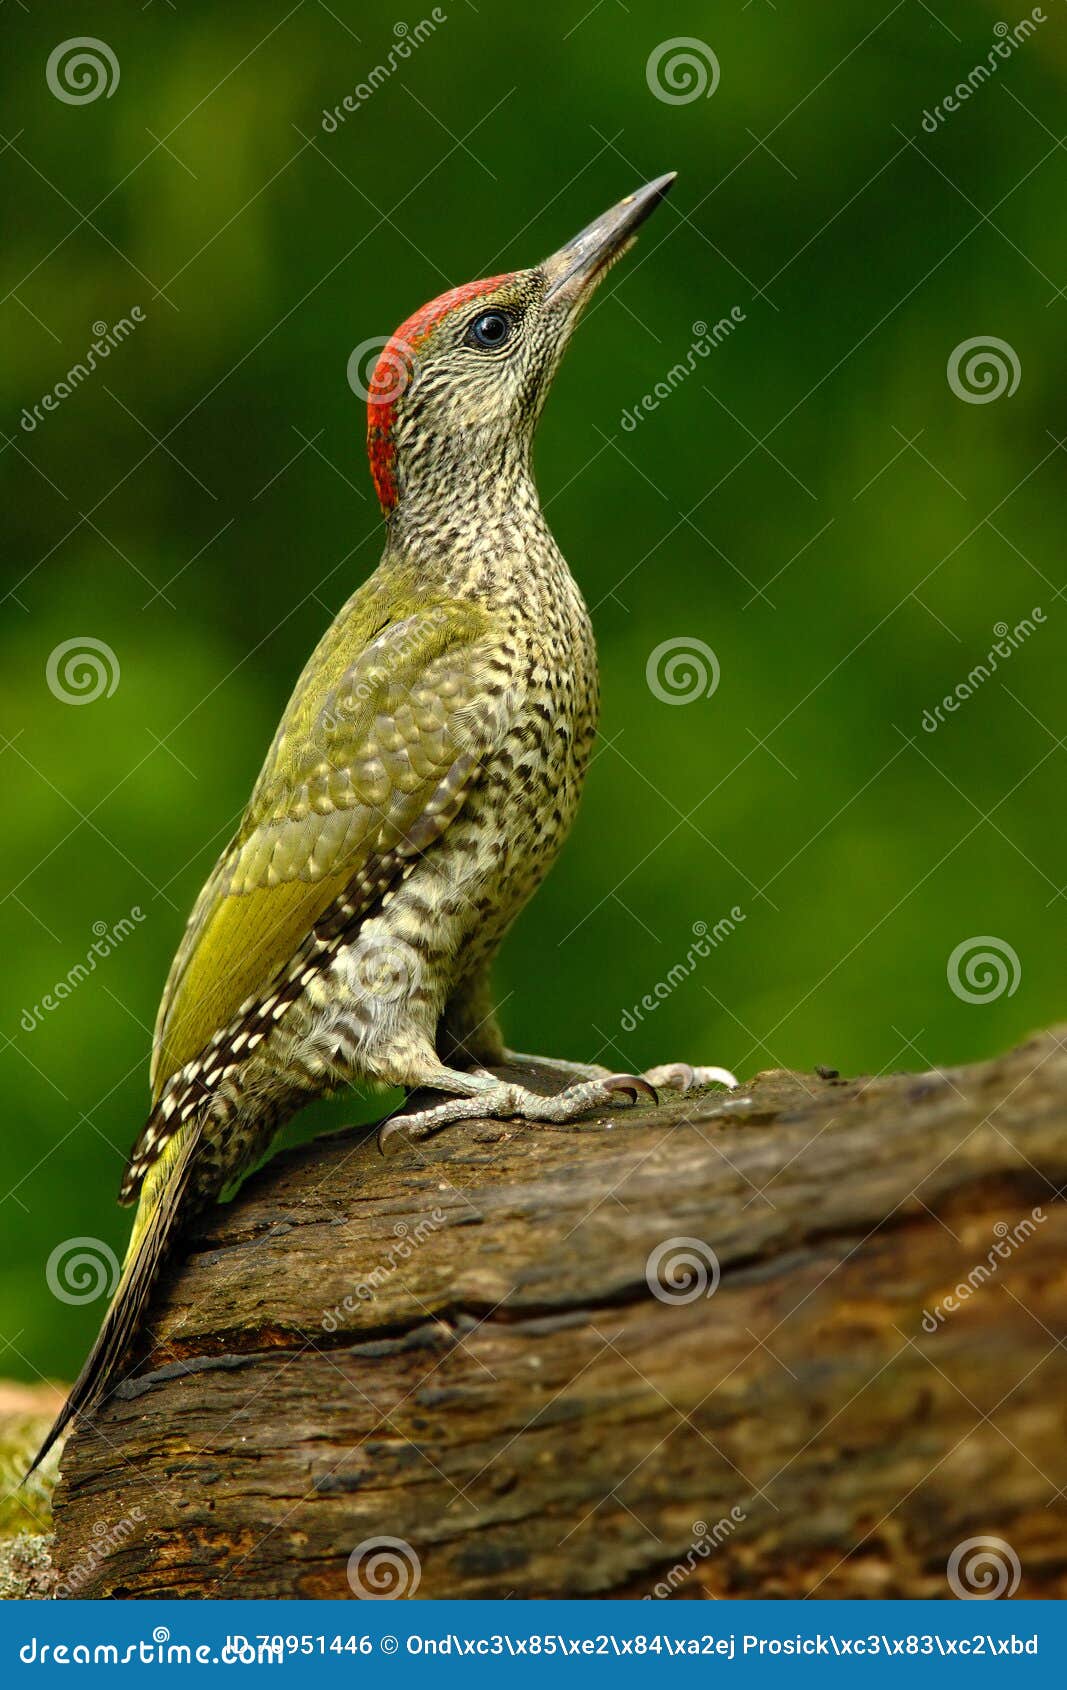 nice green bird green woodpecker, picus viridis, sitting on the tree trunk with yellow lichen, bird in the nature habitat, hungary